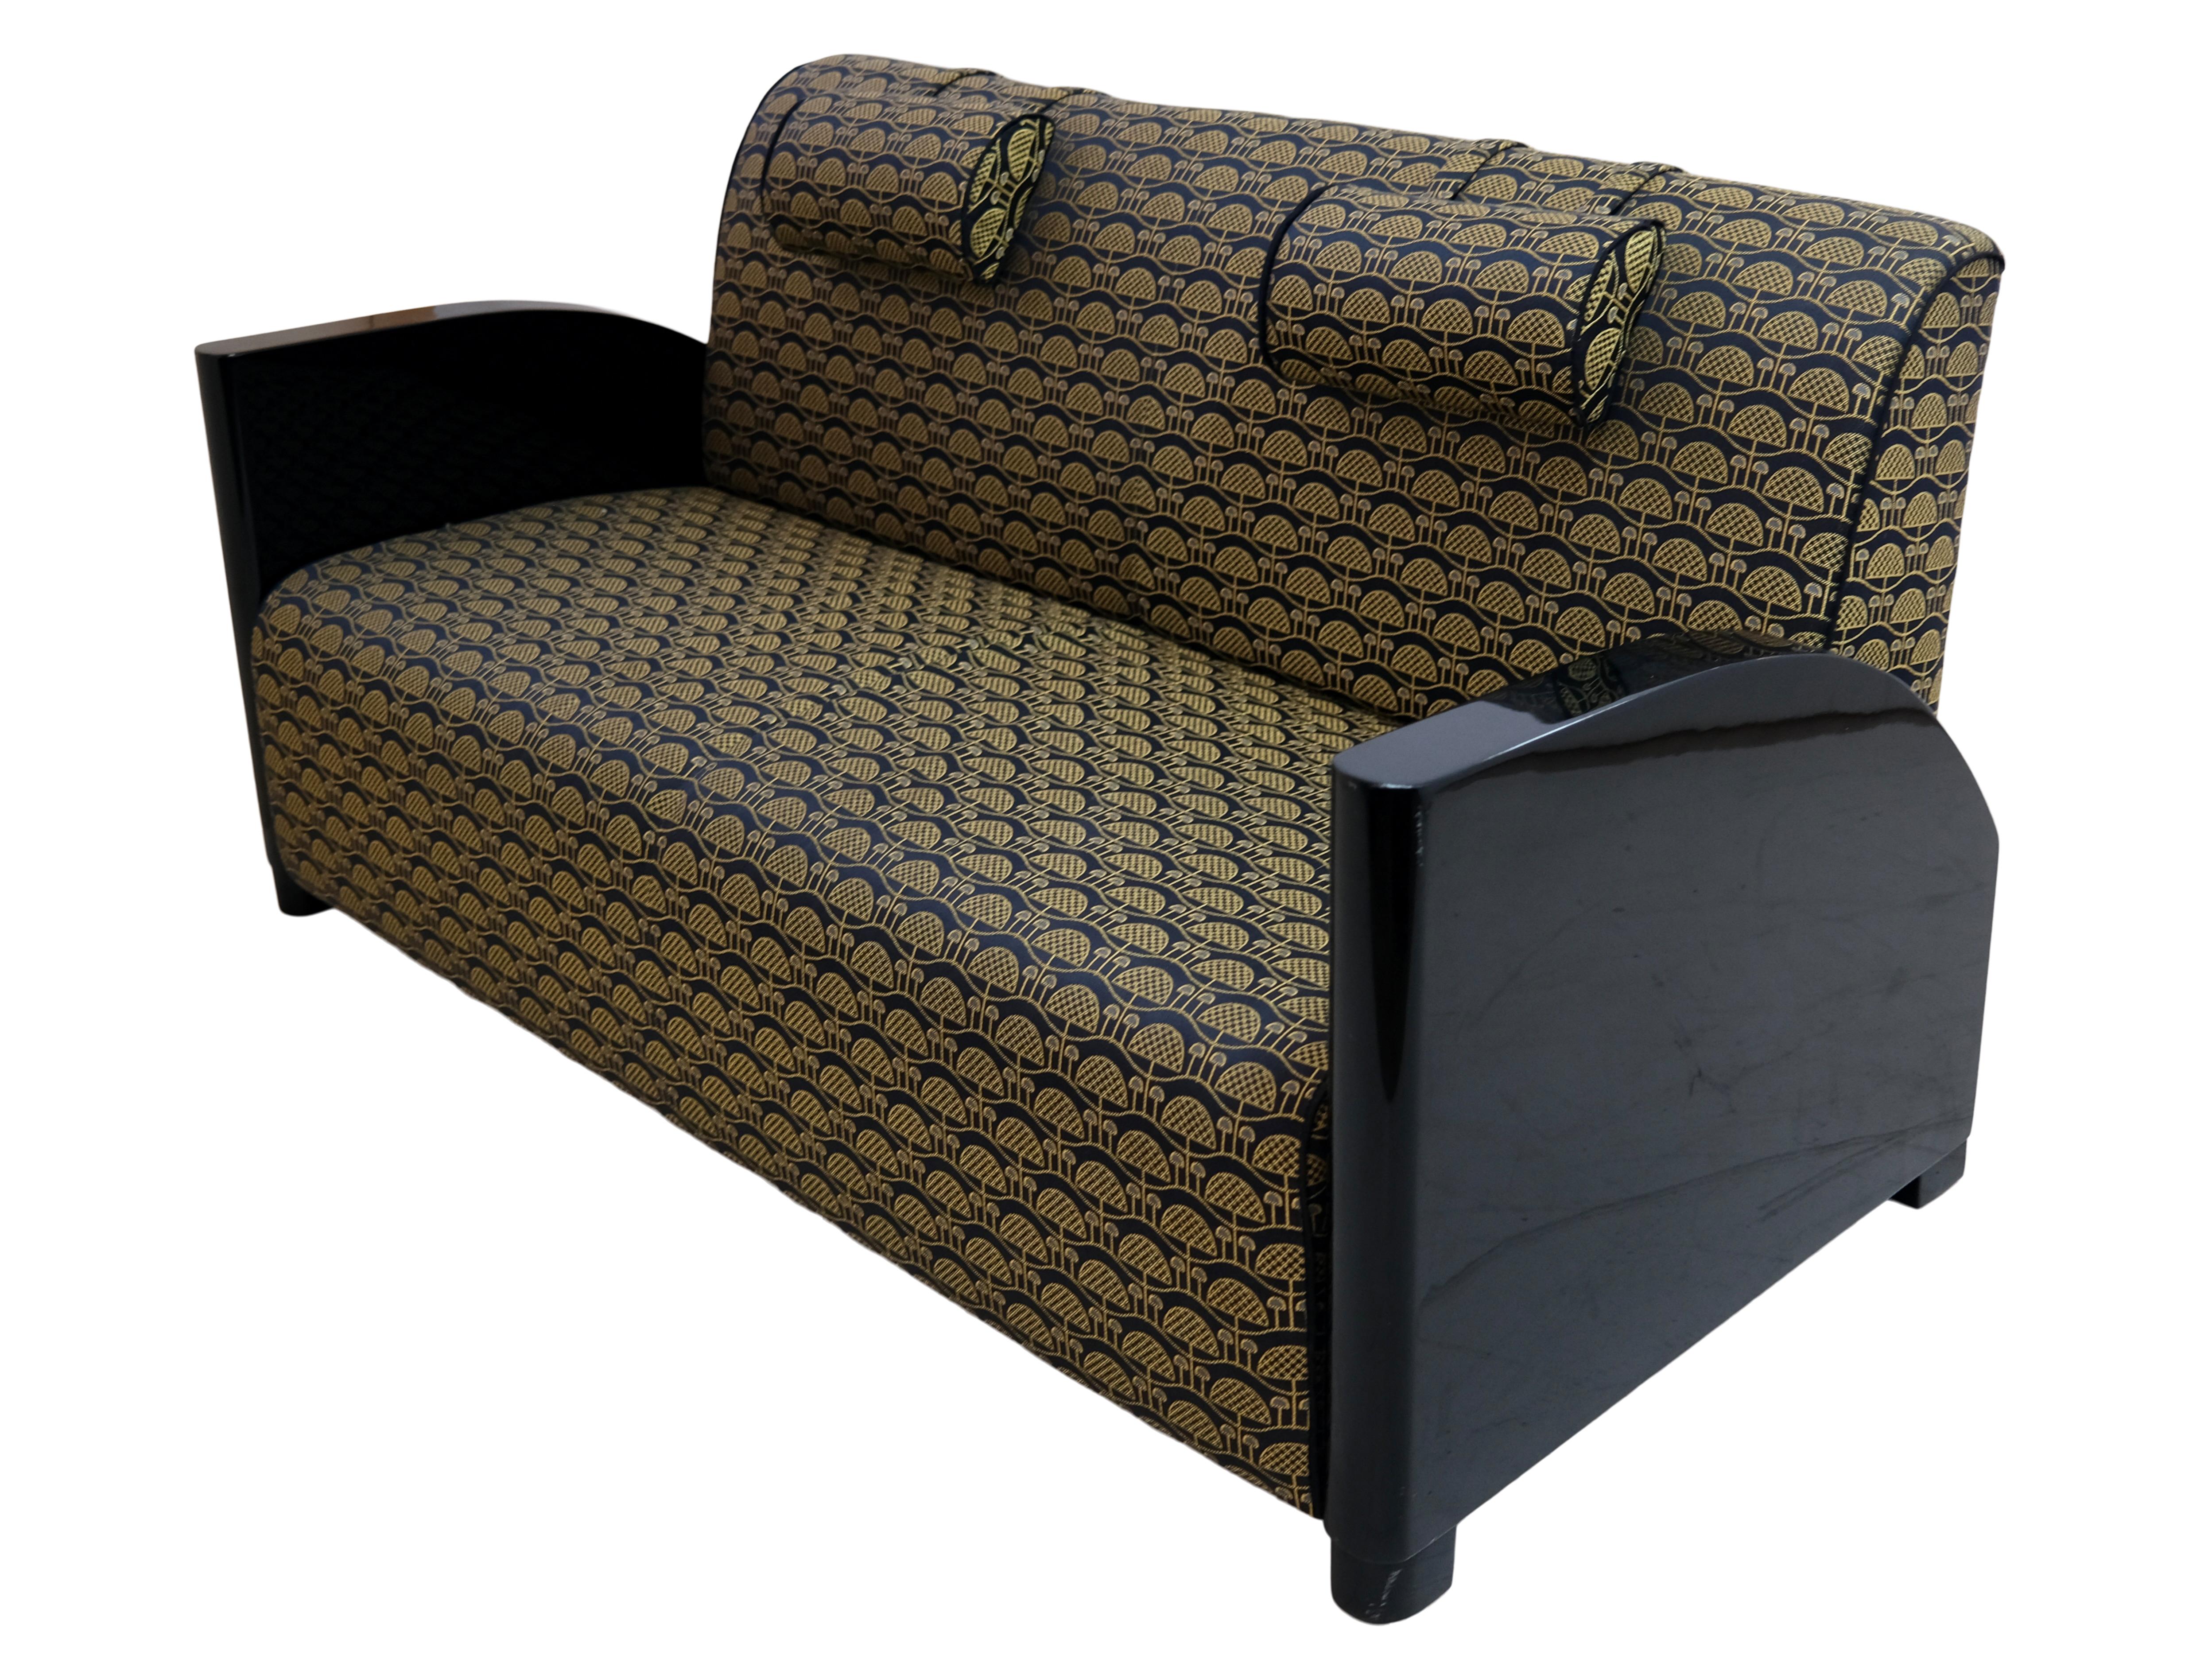 Art Deco Sofa
Piano lacquer, black high gloss
Golden upholstery

Original Art Deco, France 1930s

Dimensions:
Width: 167 cm
Height: 82 cm
Depth: 77,5 cm
Seat height: 40 cm